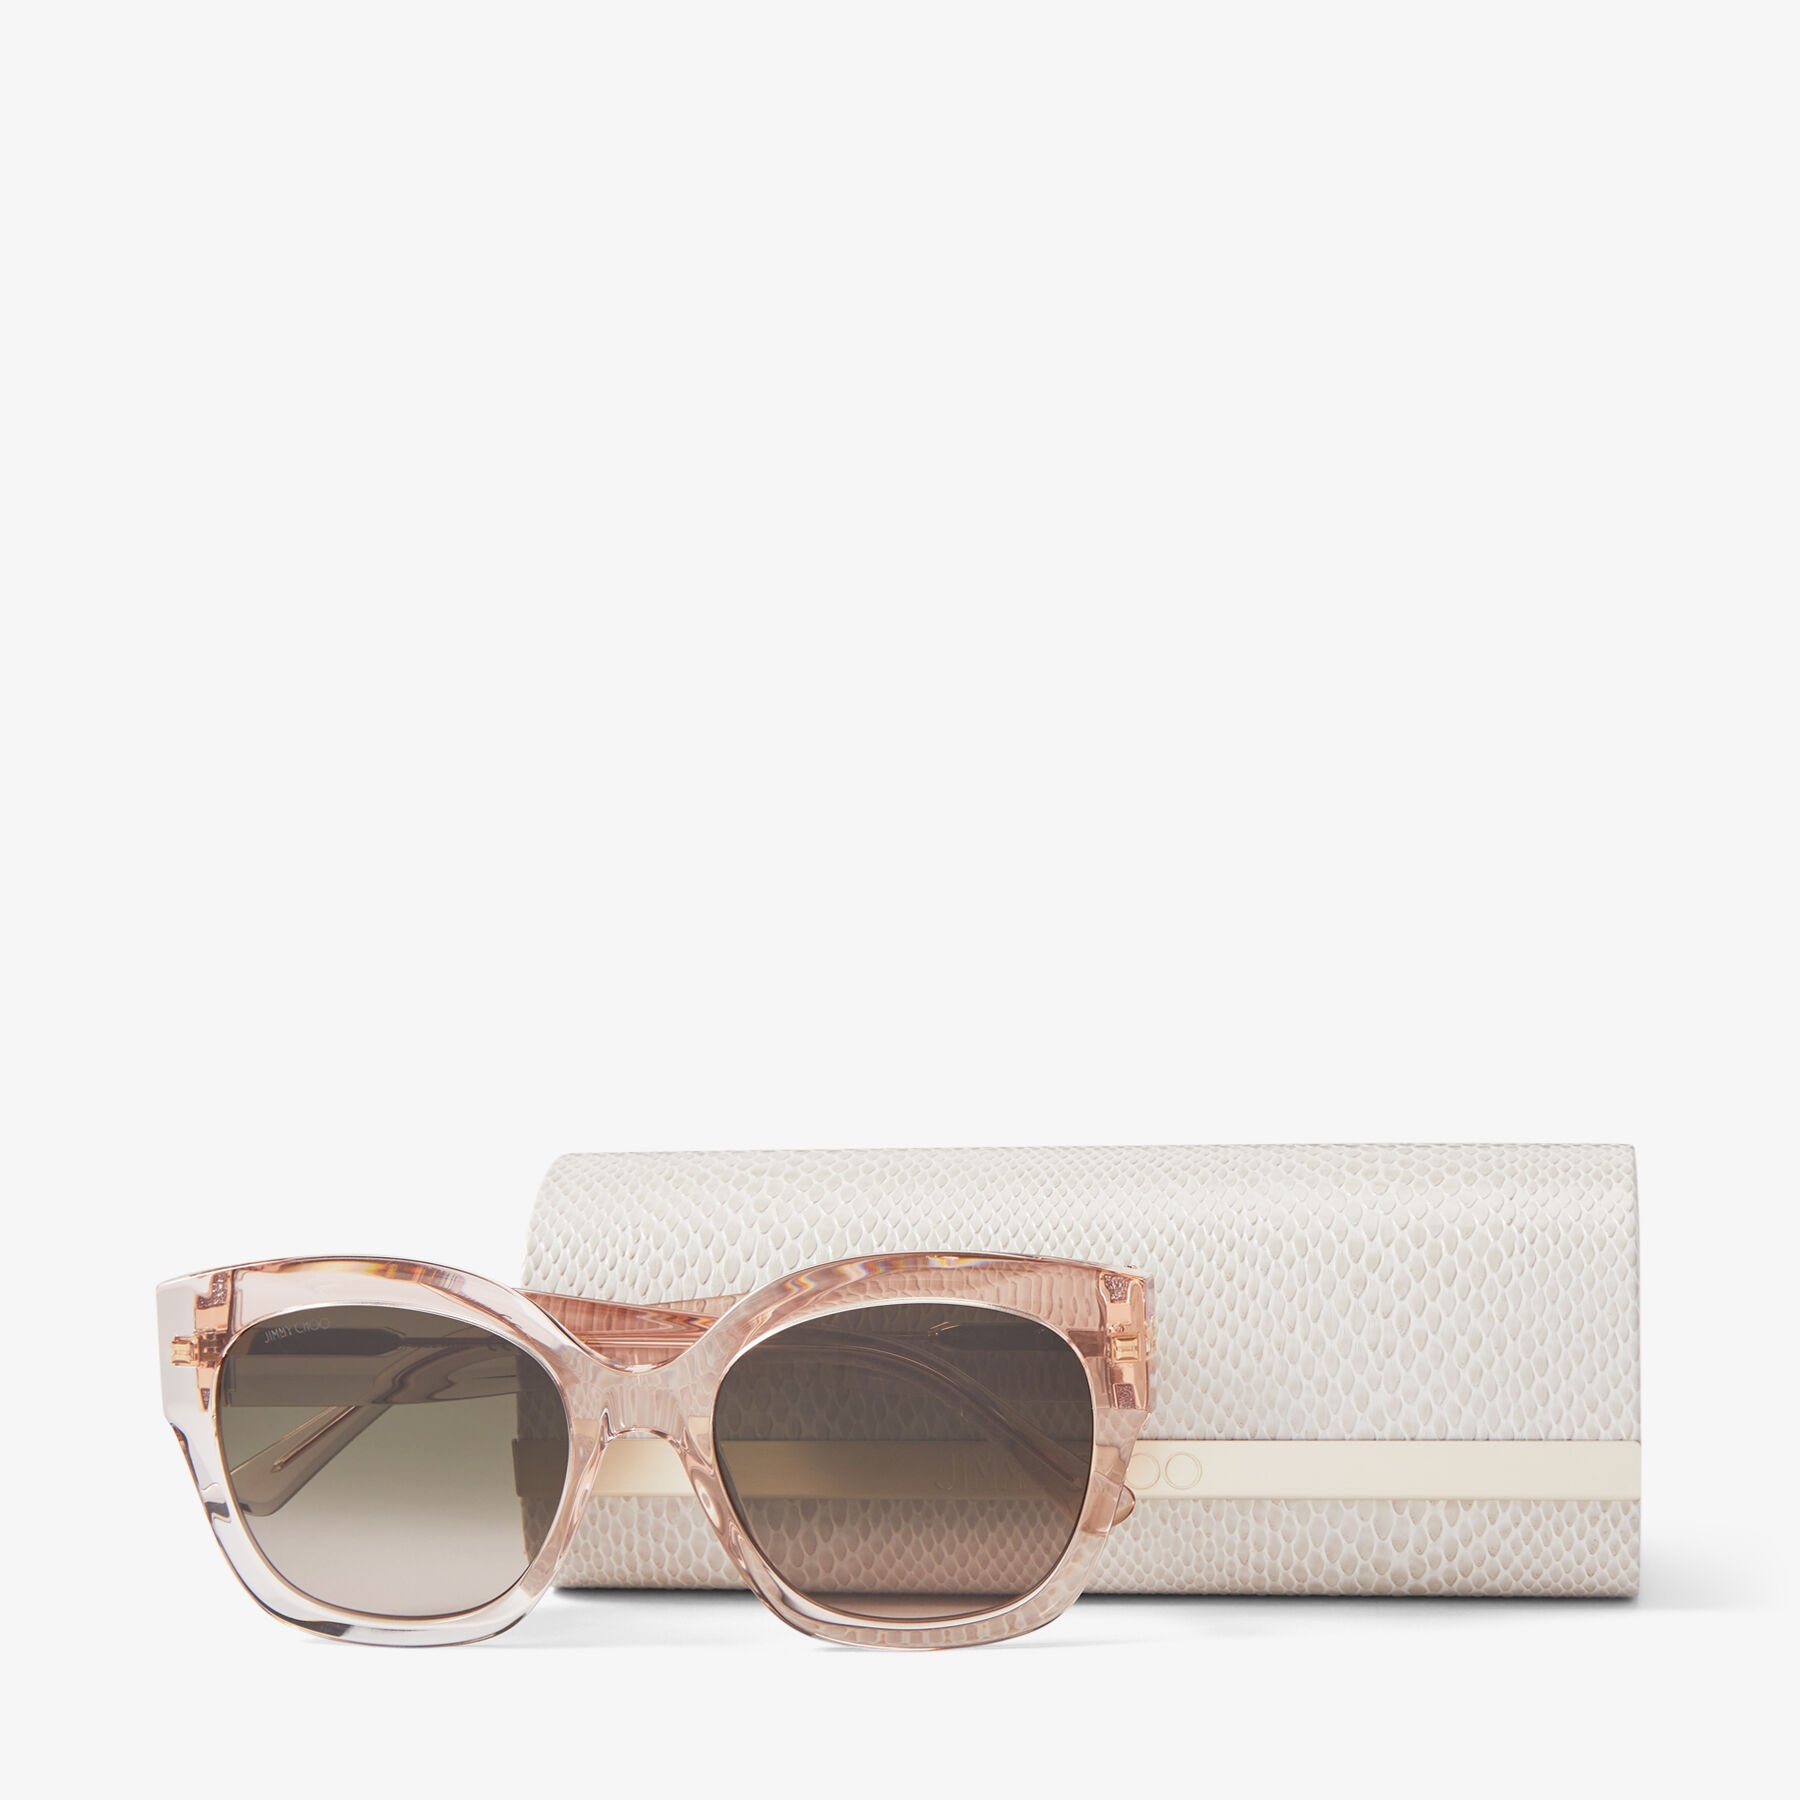 Leela
Nude Square Frame Sunglasses with Glitter - 4